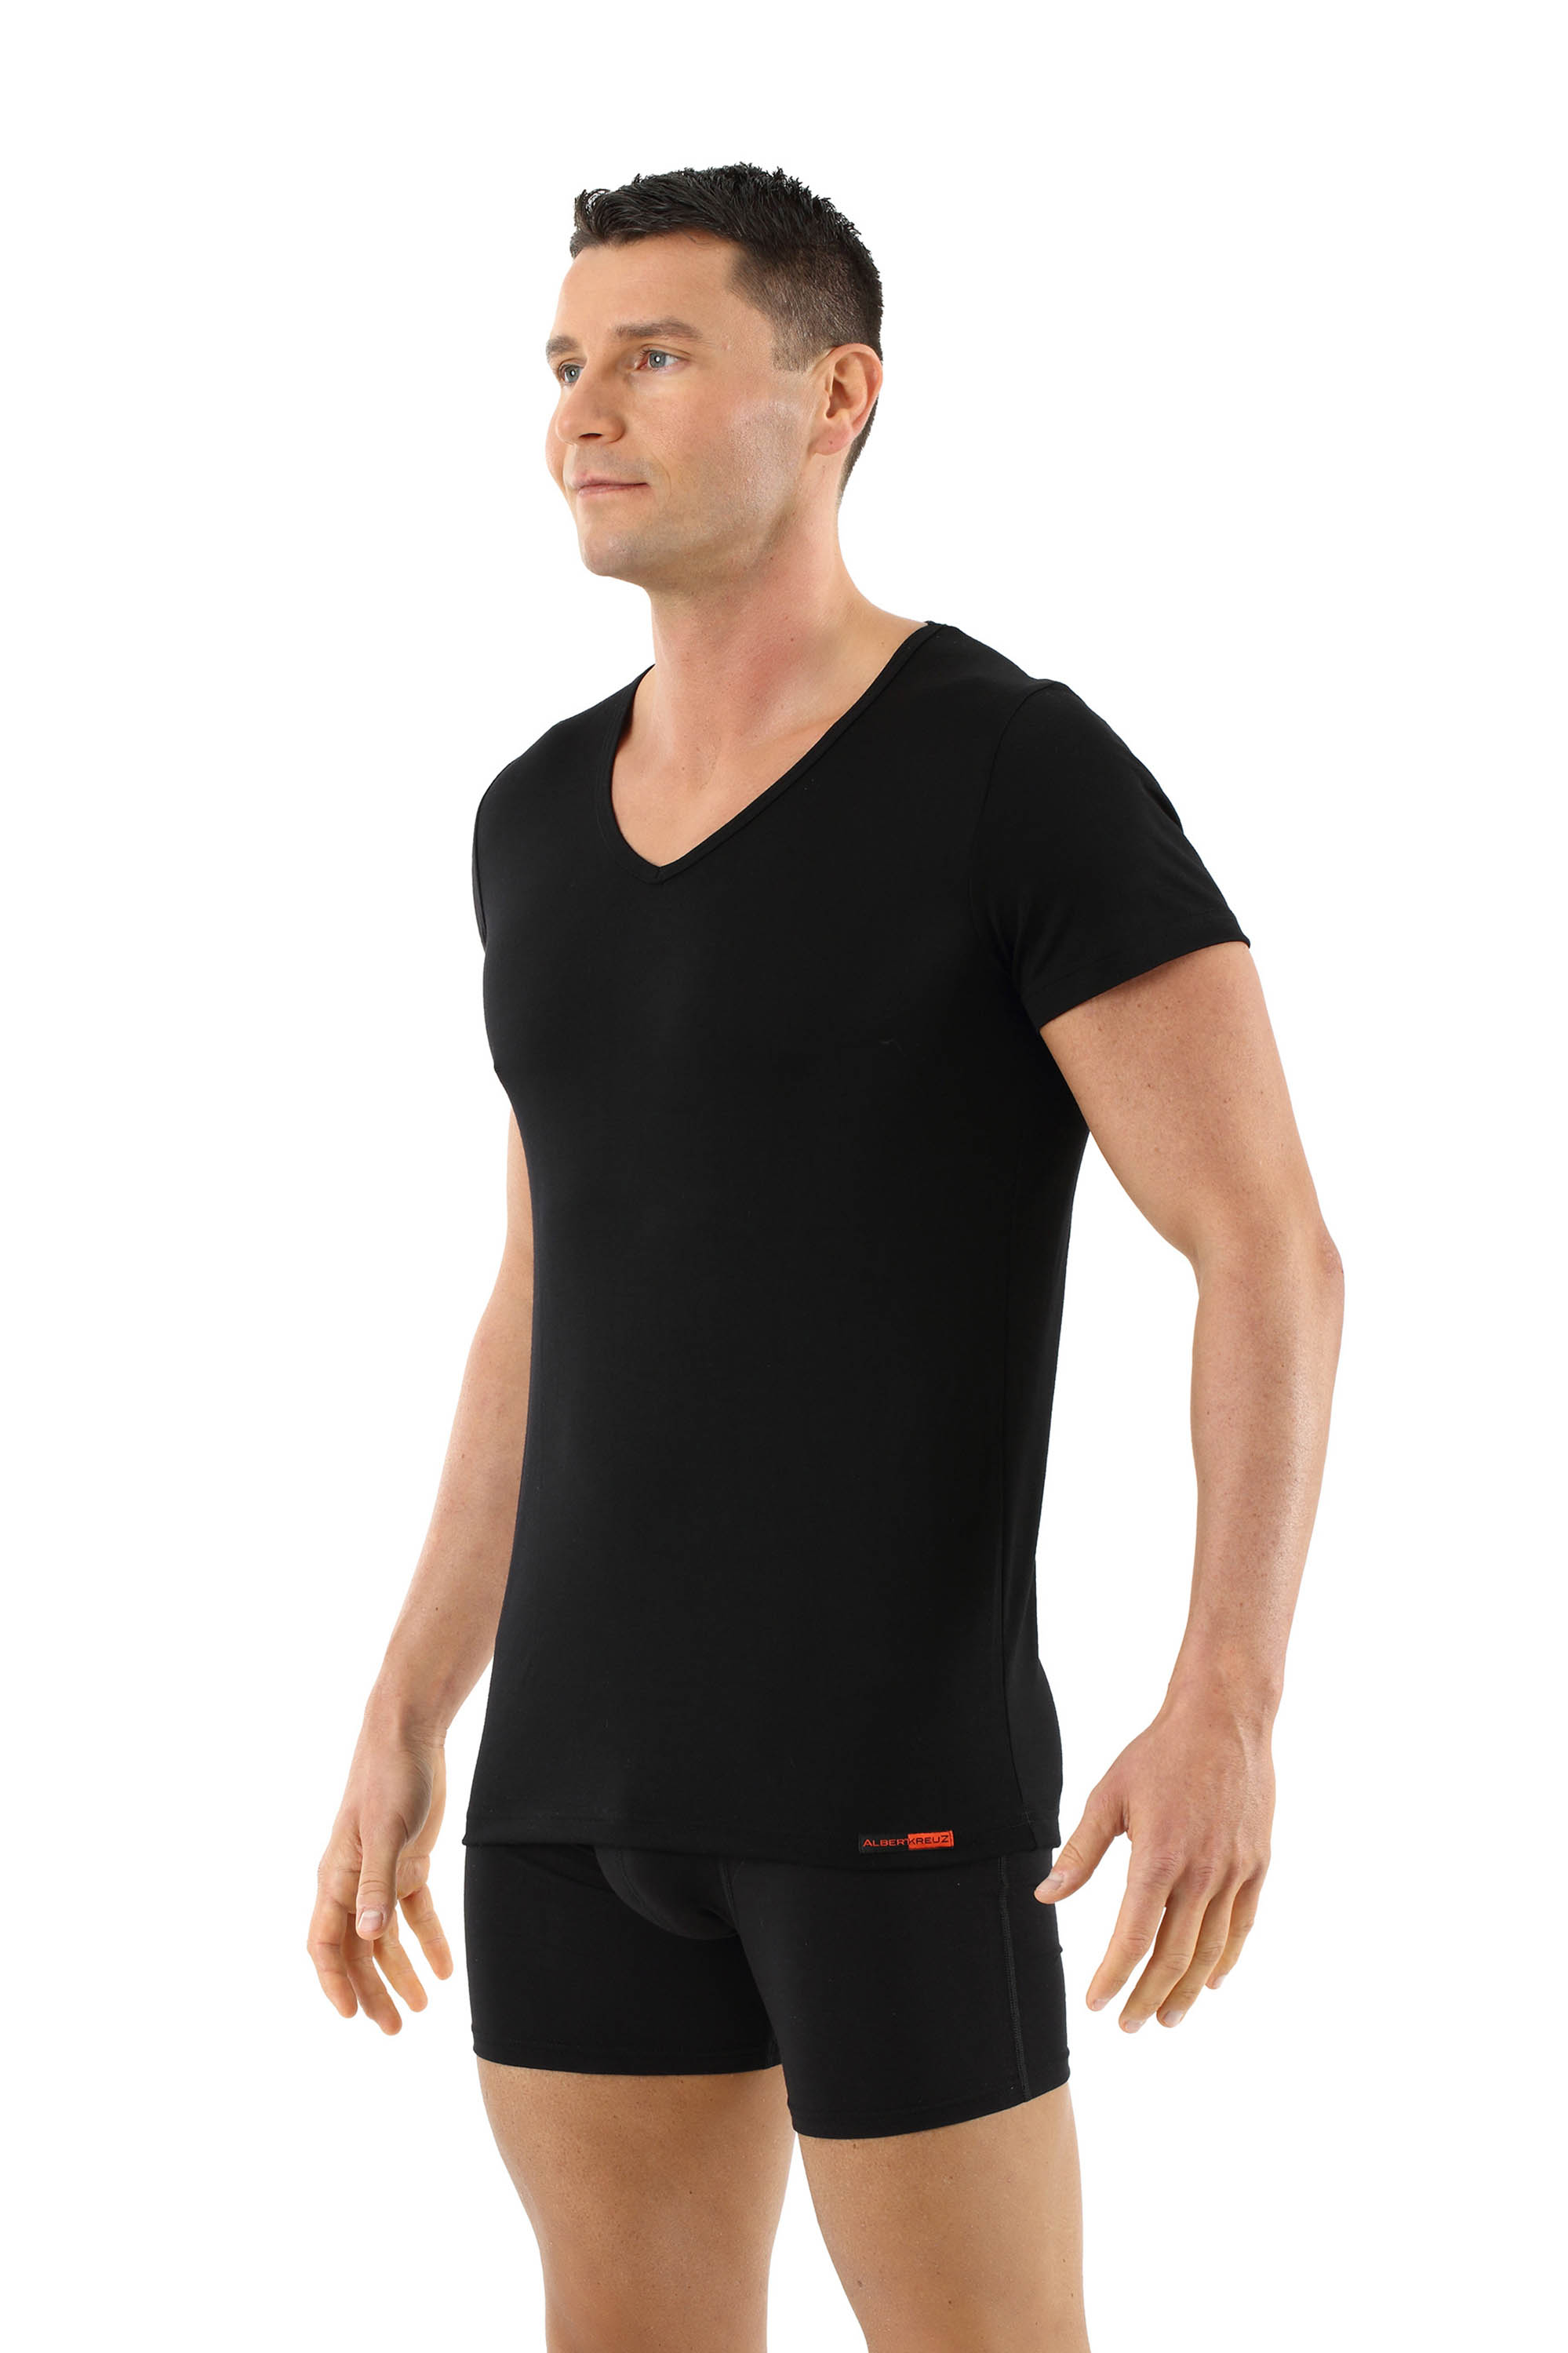 Men's undershirt merino wool short sleeves v-neck black | ALBERT KREUZ